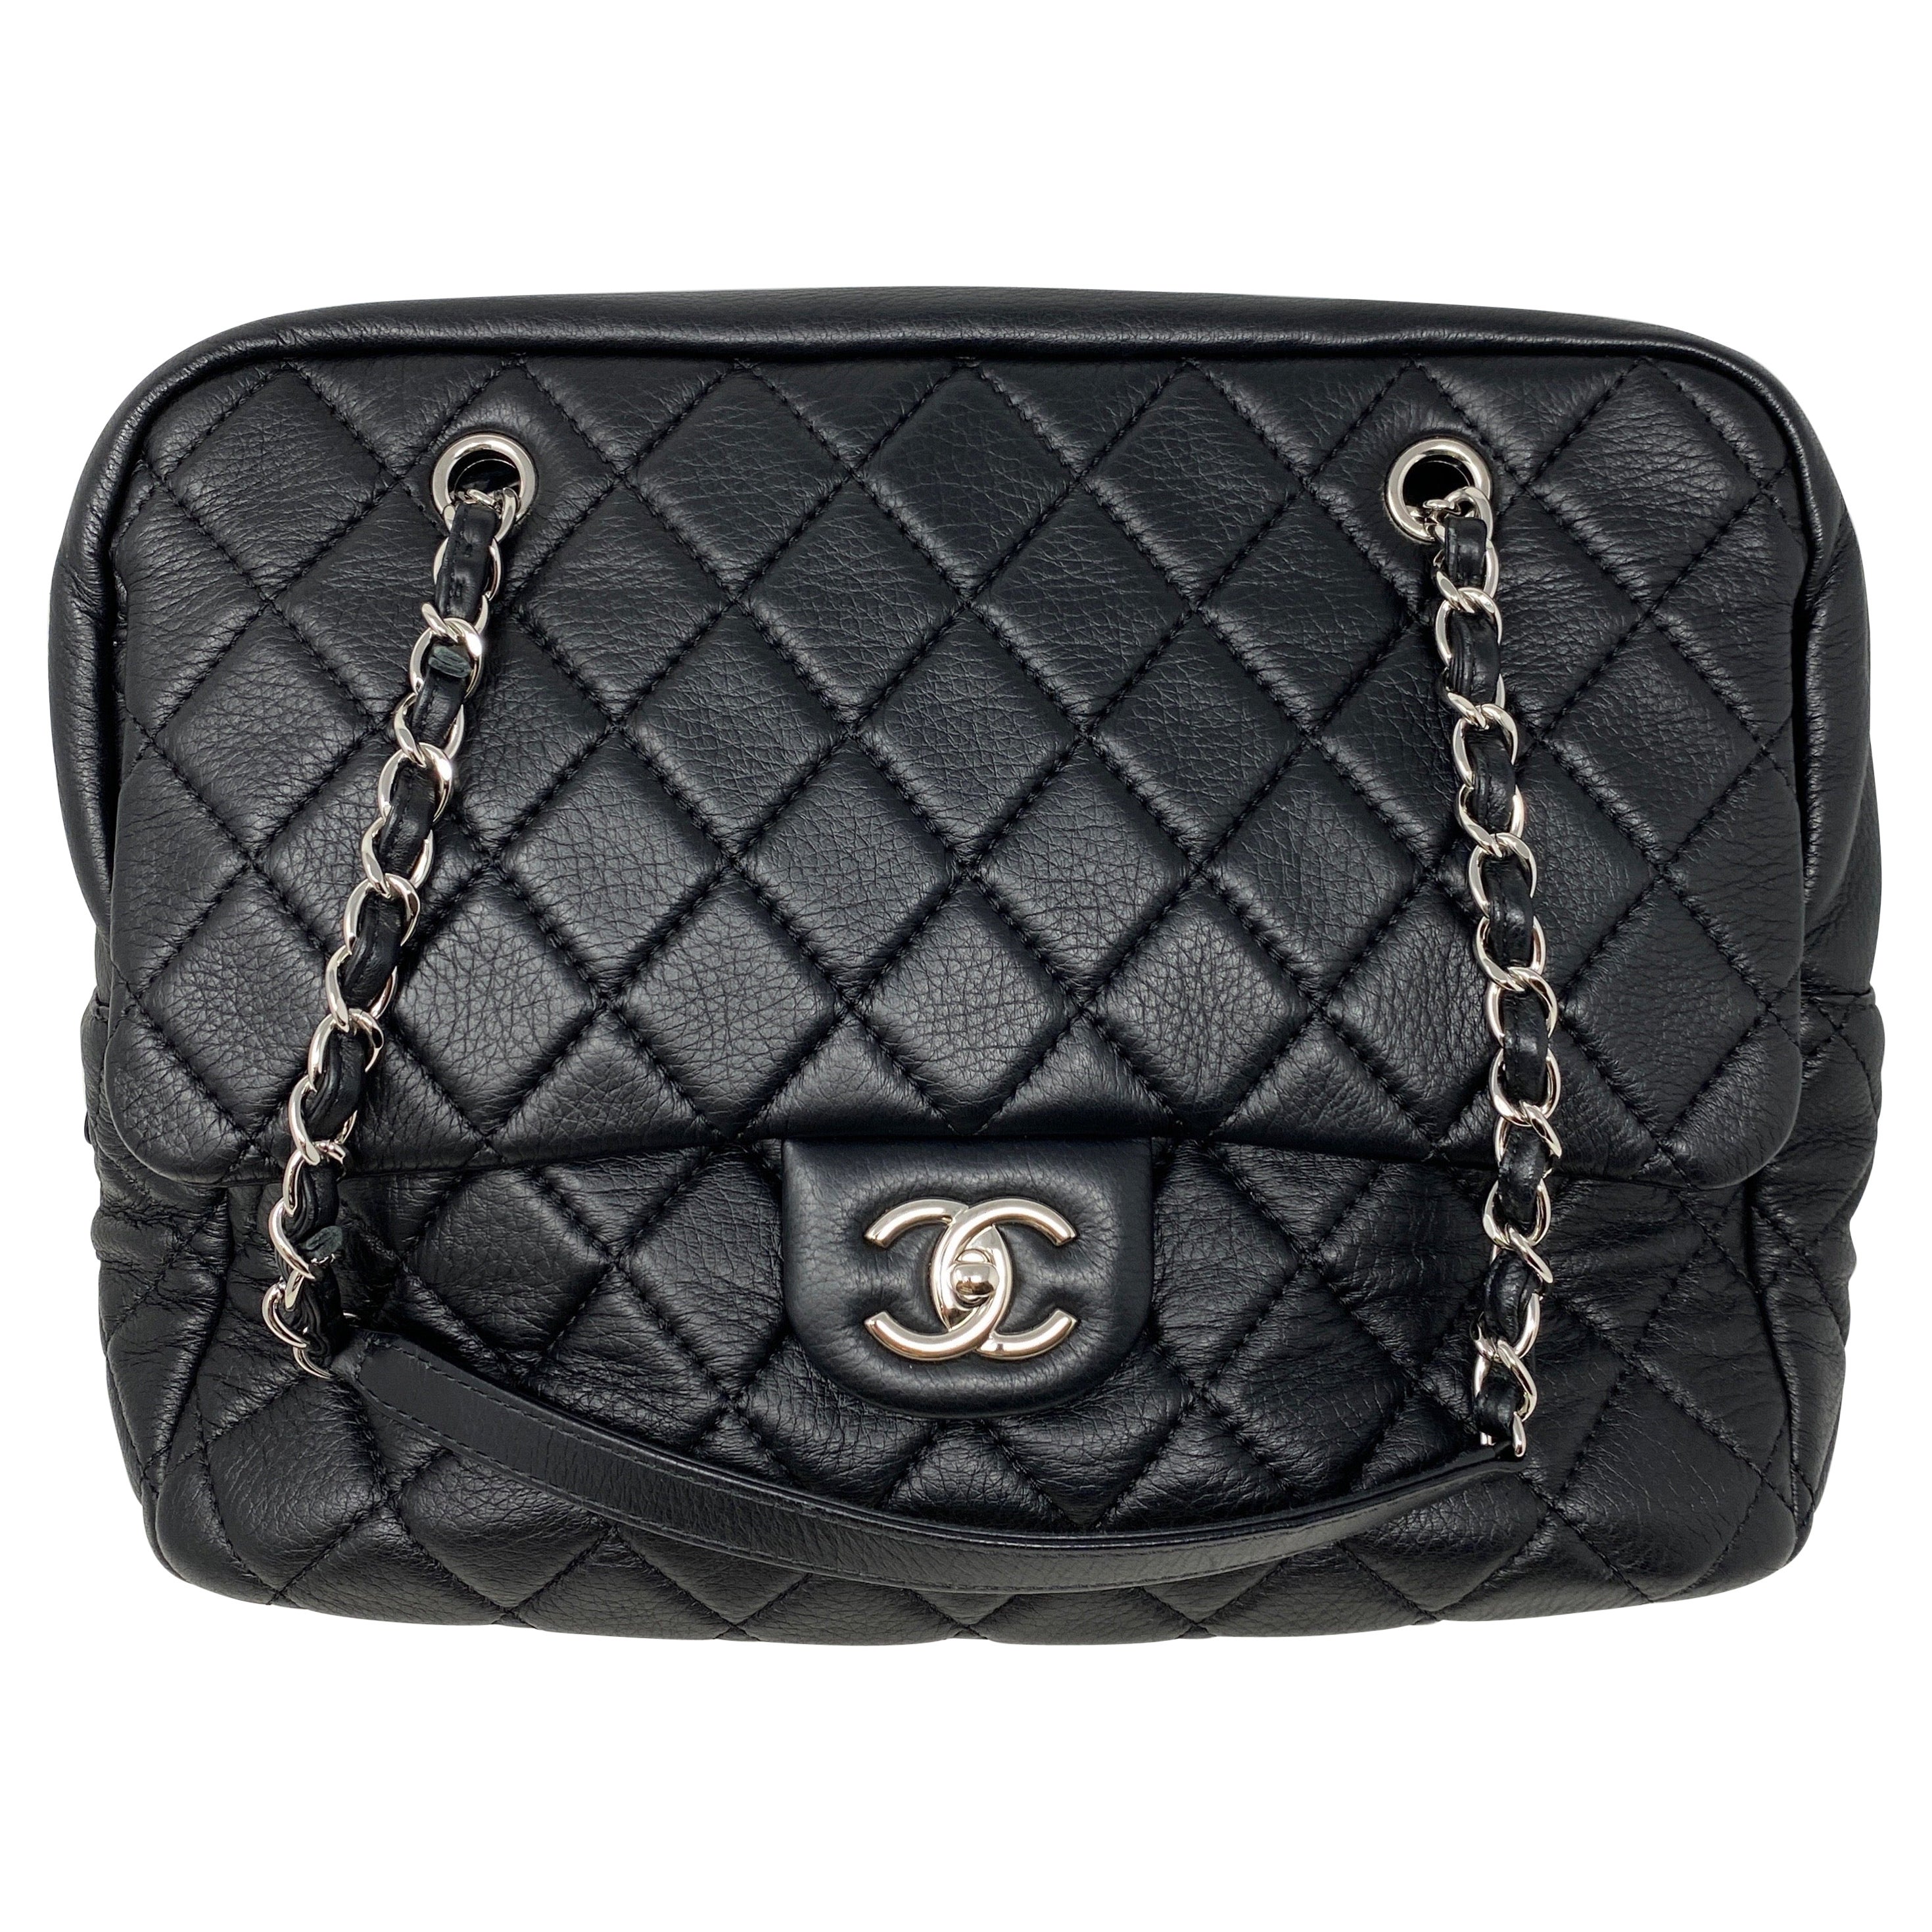 Chanel Black Bowler Tote Bag